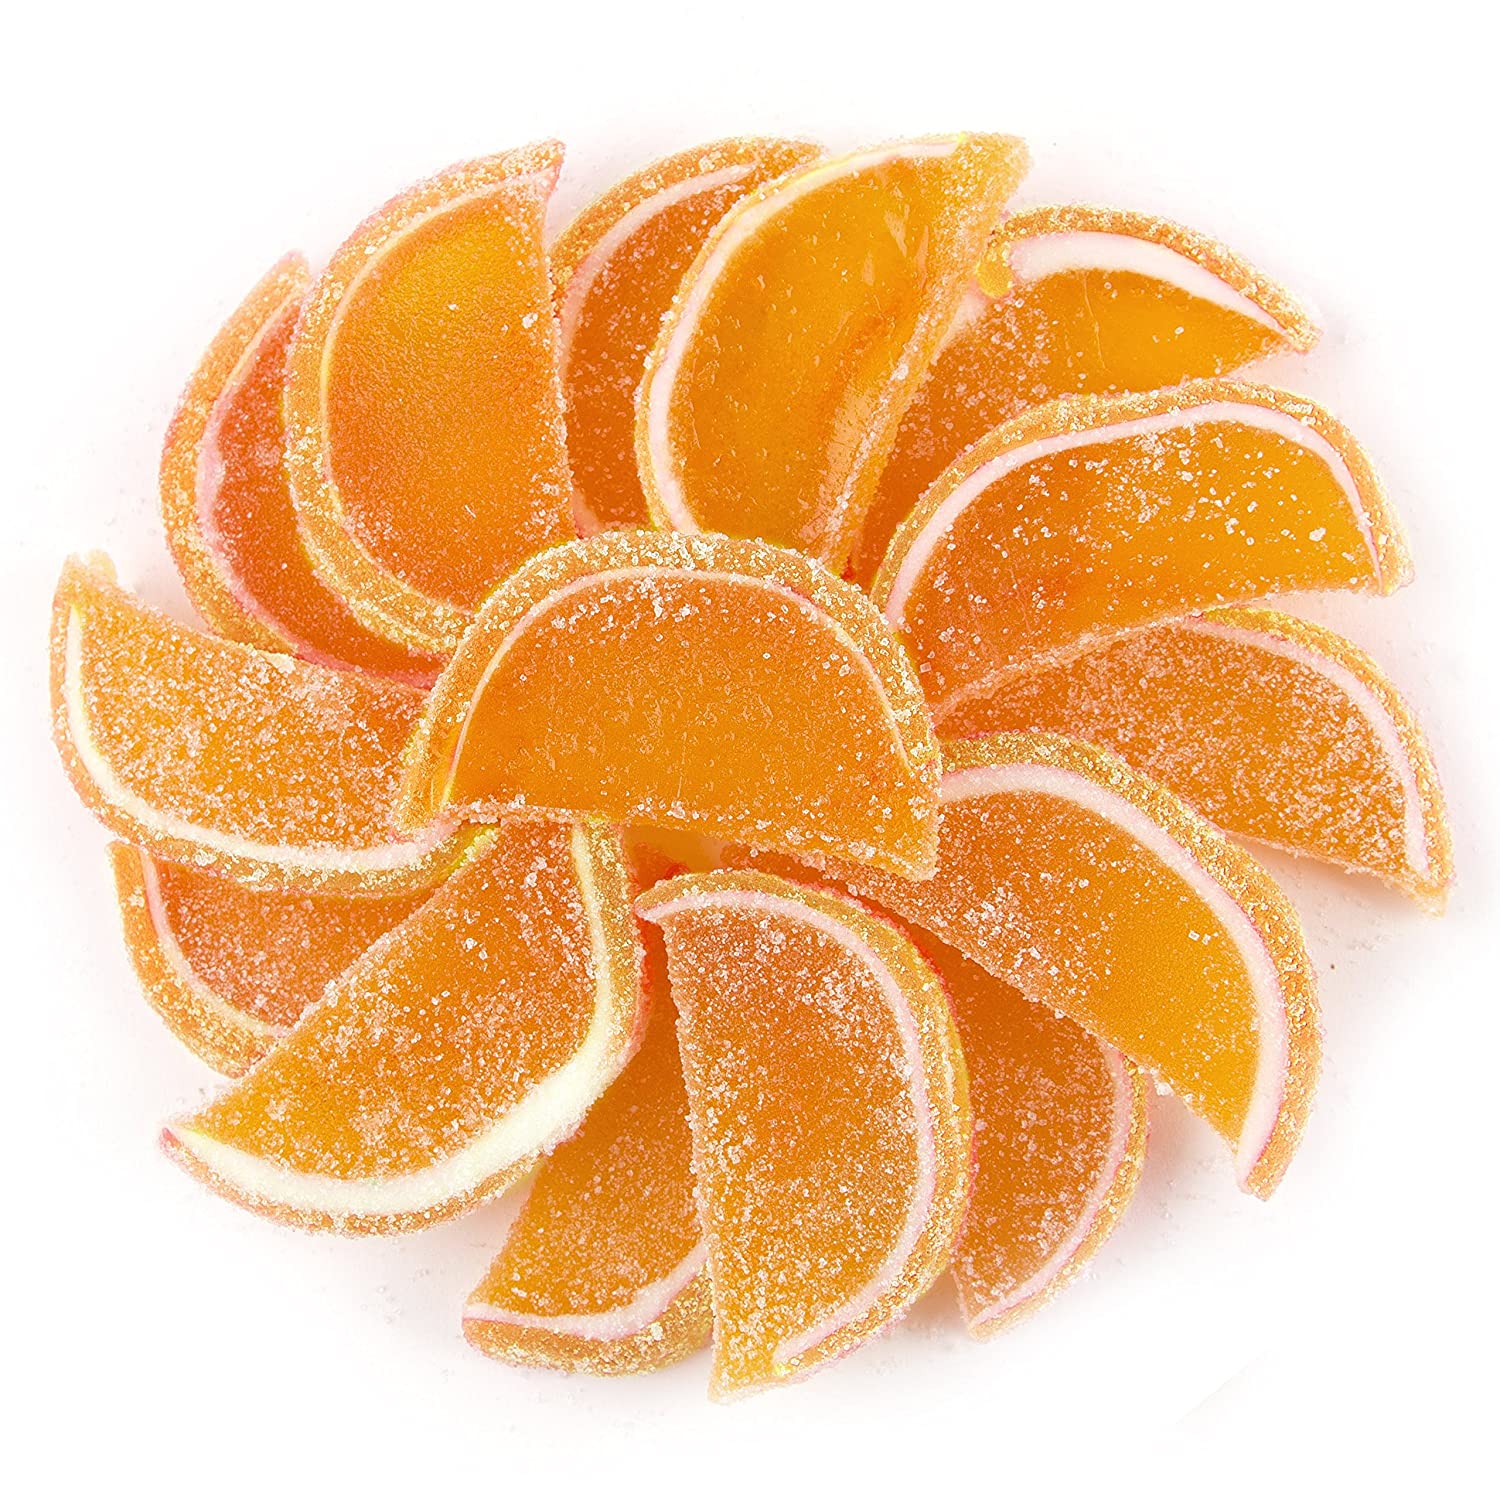 Orange Fruit Slices 5 pc